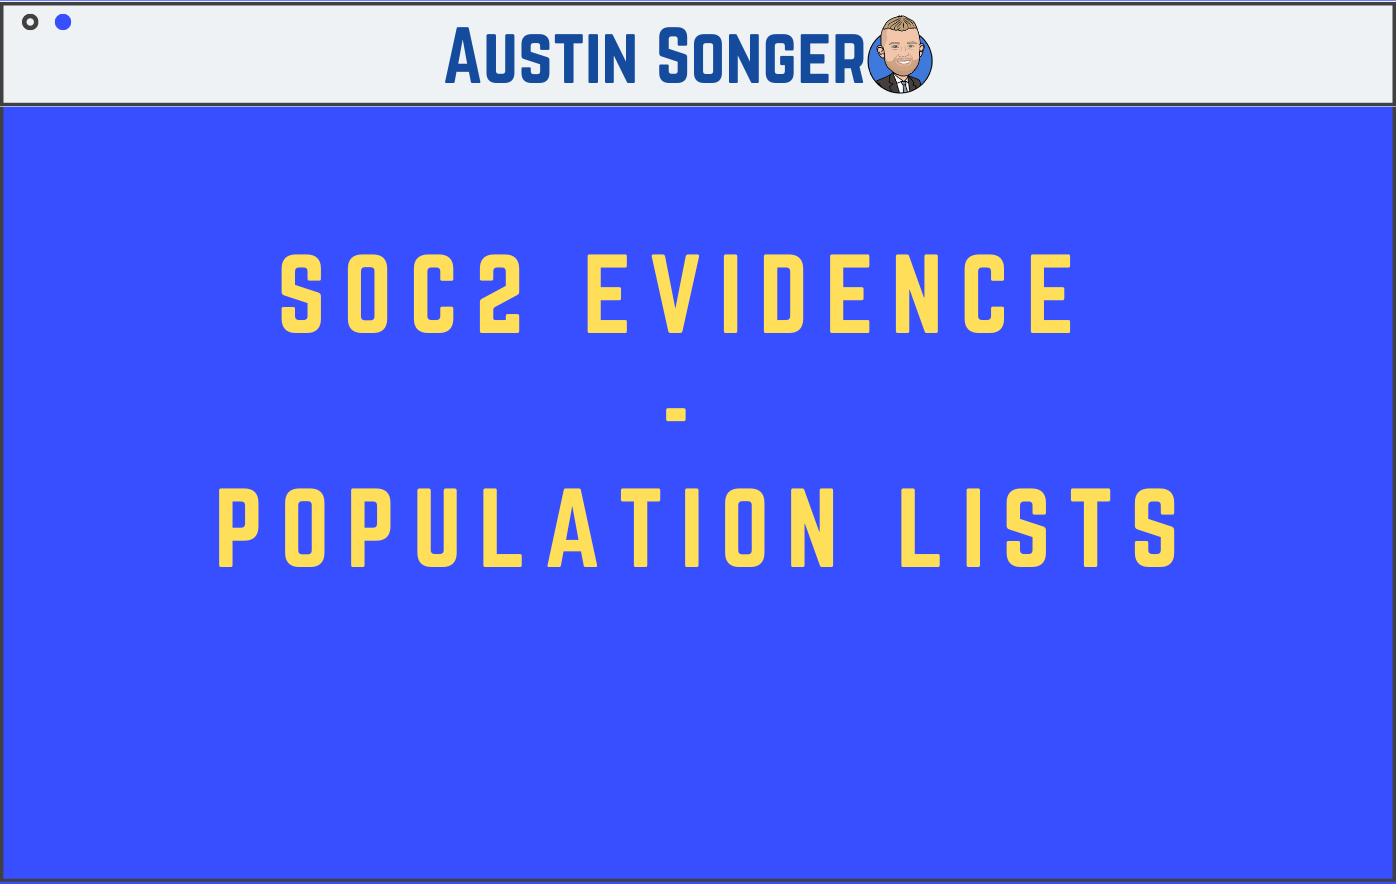 SOC2 Evidence - Population Lists